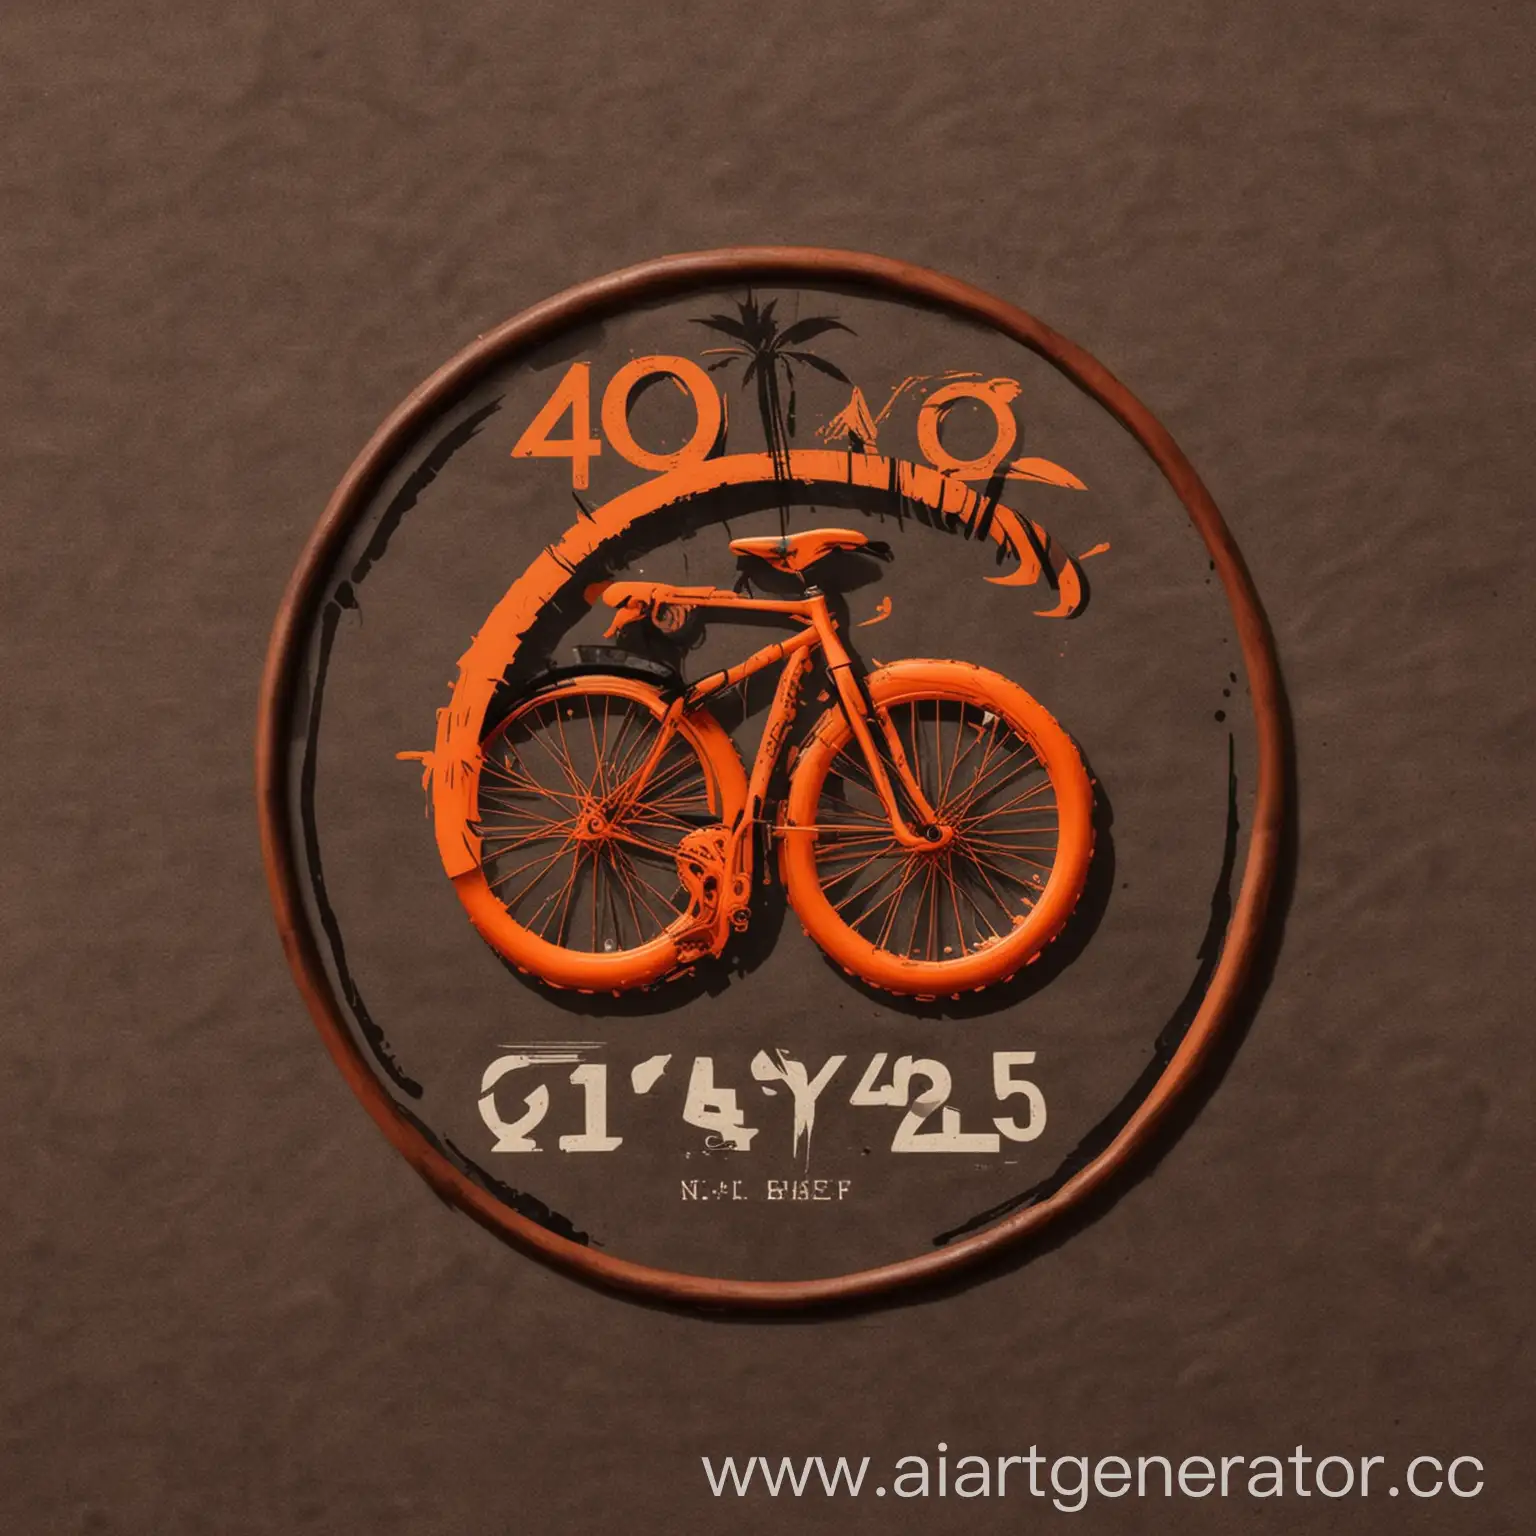 Modern-Minimalist-Bicycle-Club-Logo-Celebrating-40-Years-with-Iconic-Design